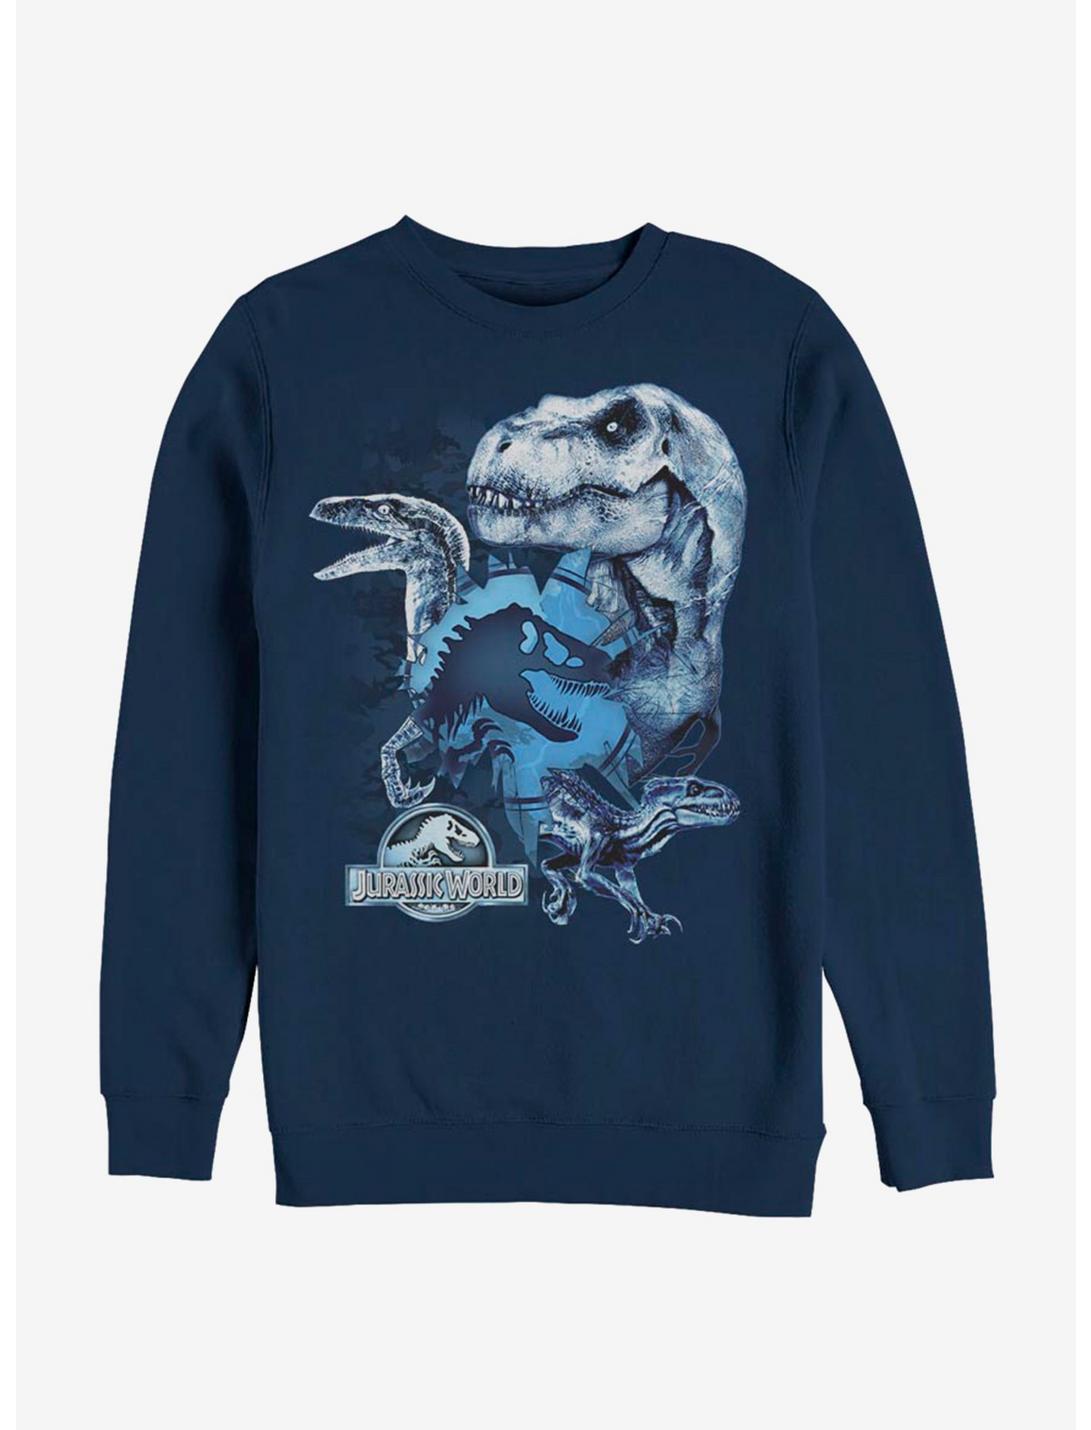 Jurassic World Glass Shard Sweatshirt, NAVY, hi-res